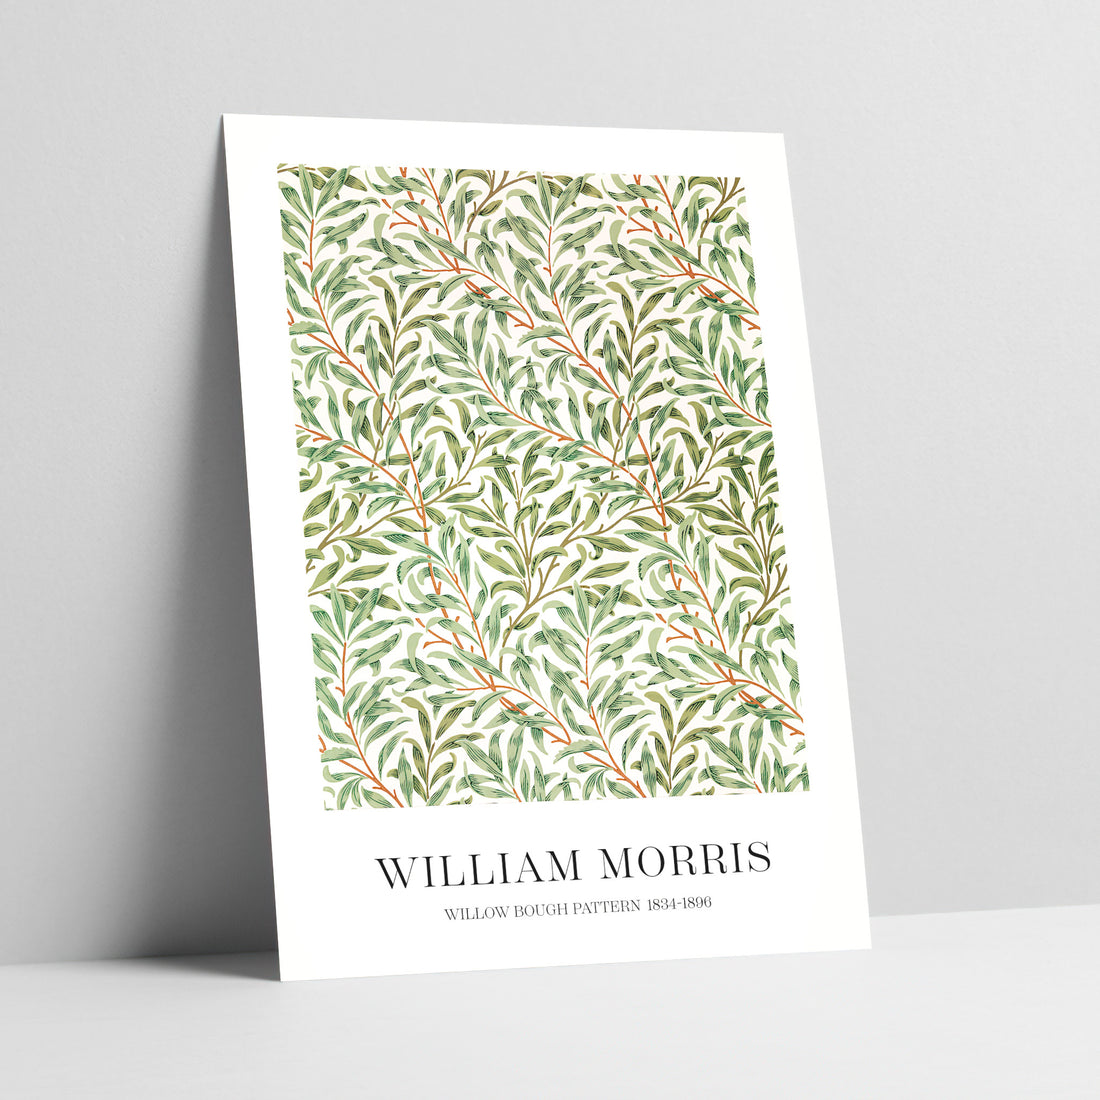 William Morris Willow Bough Pattern Gallery Art Print